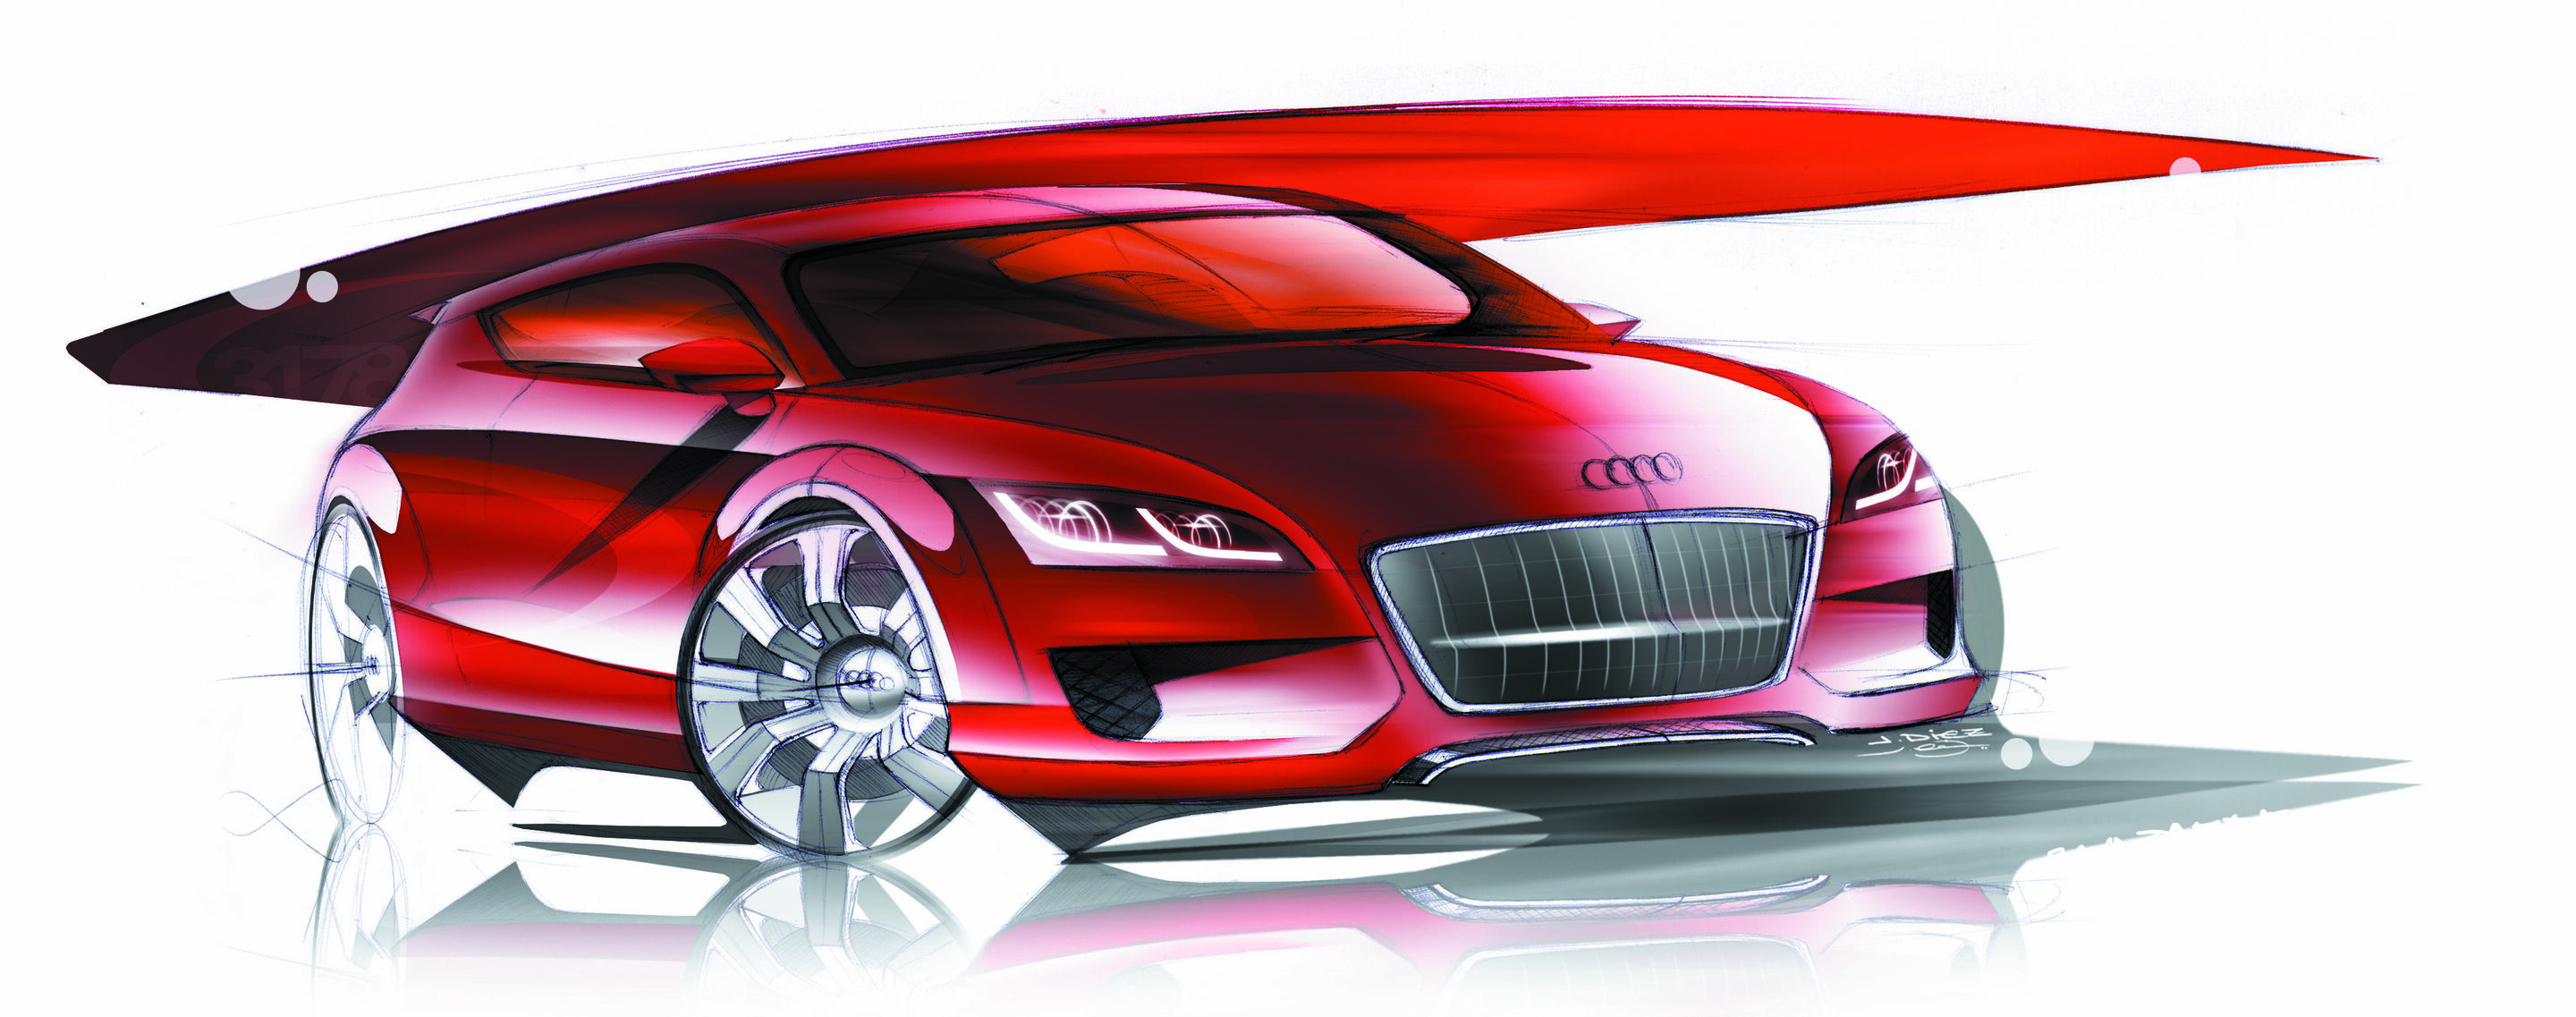 Audi Shooting Brake Concept - Design